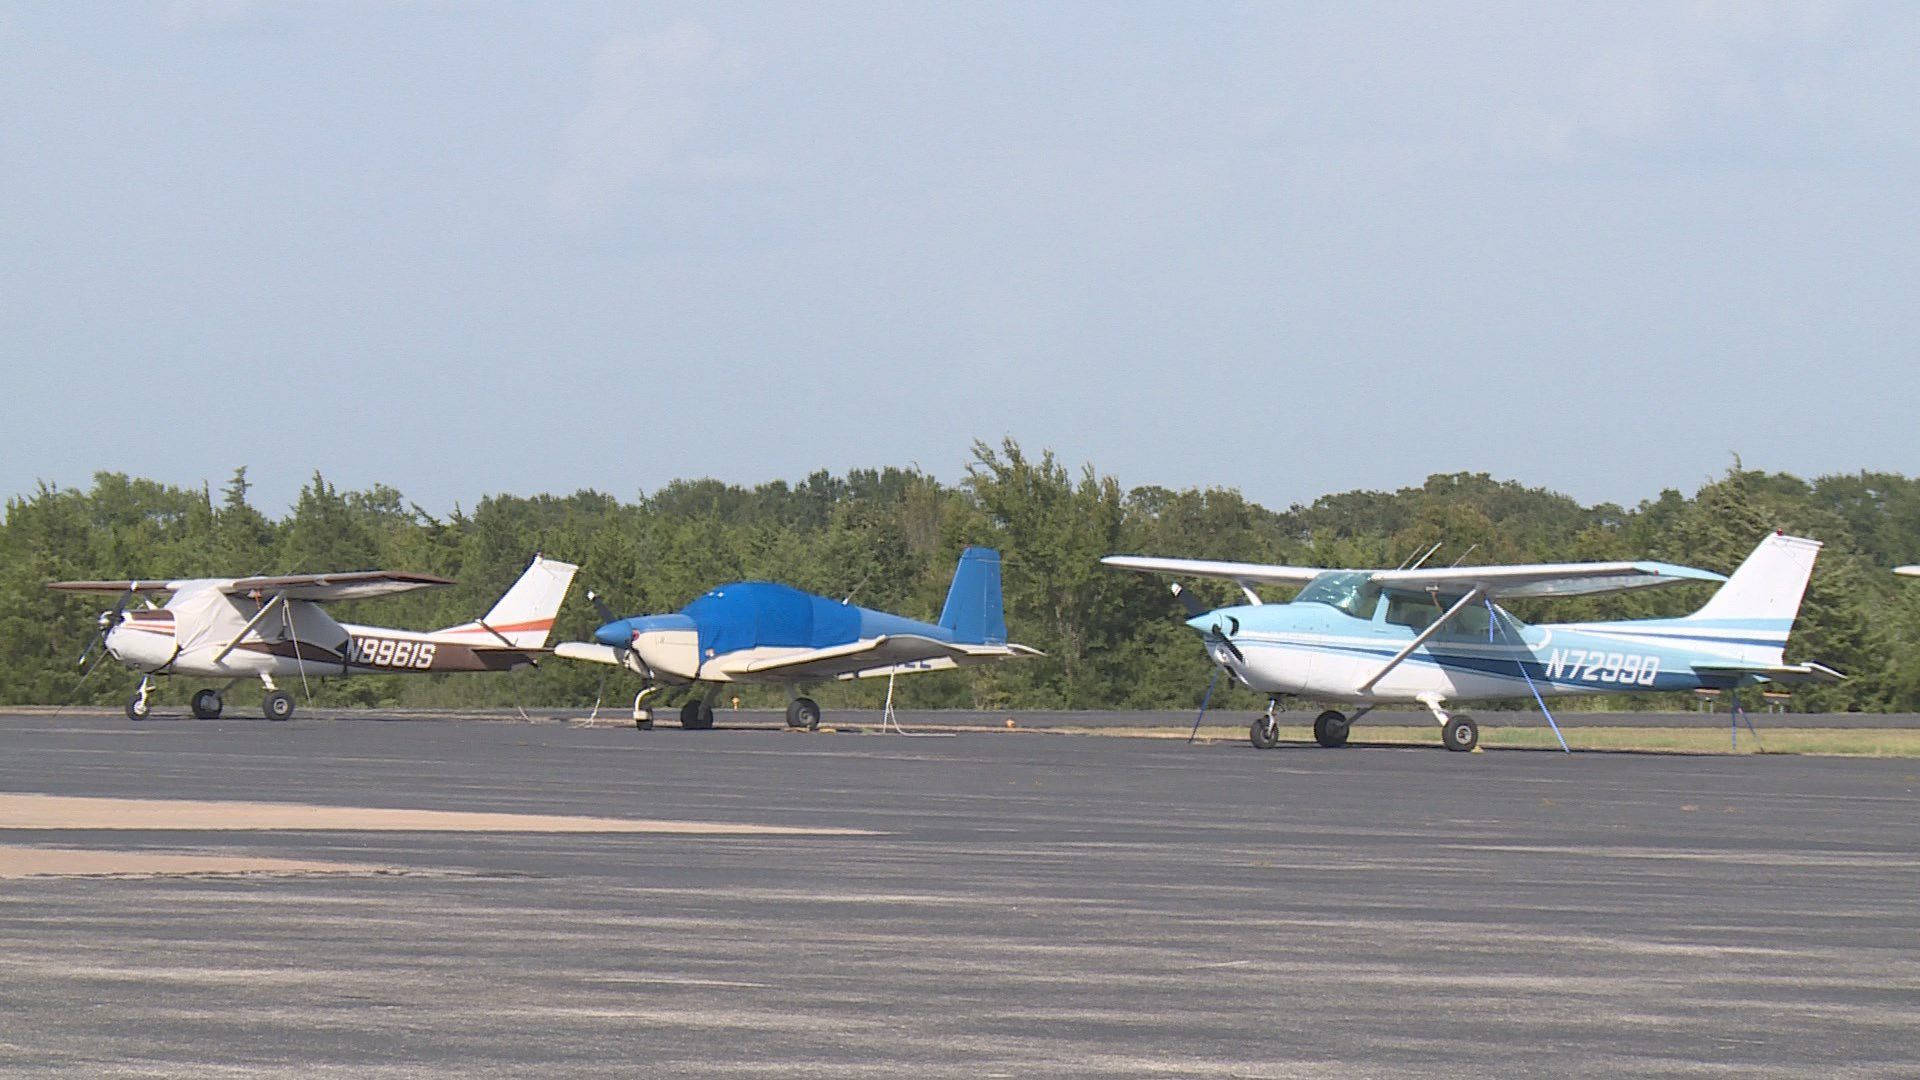 Small Planes At Airport Parking Wallpaper